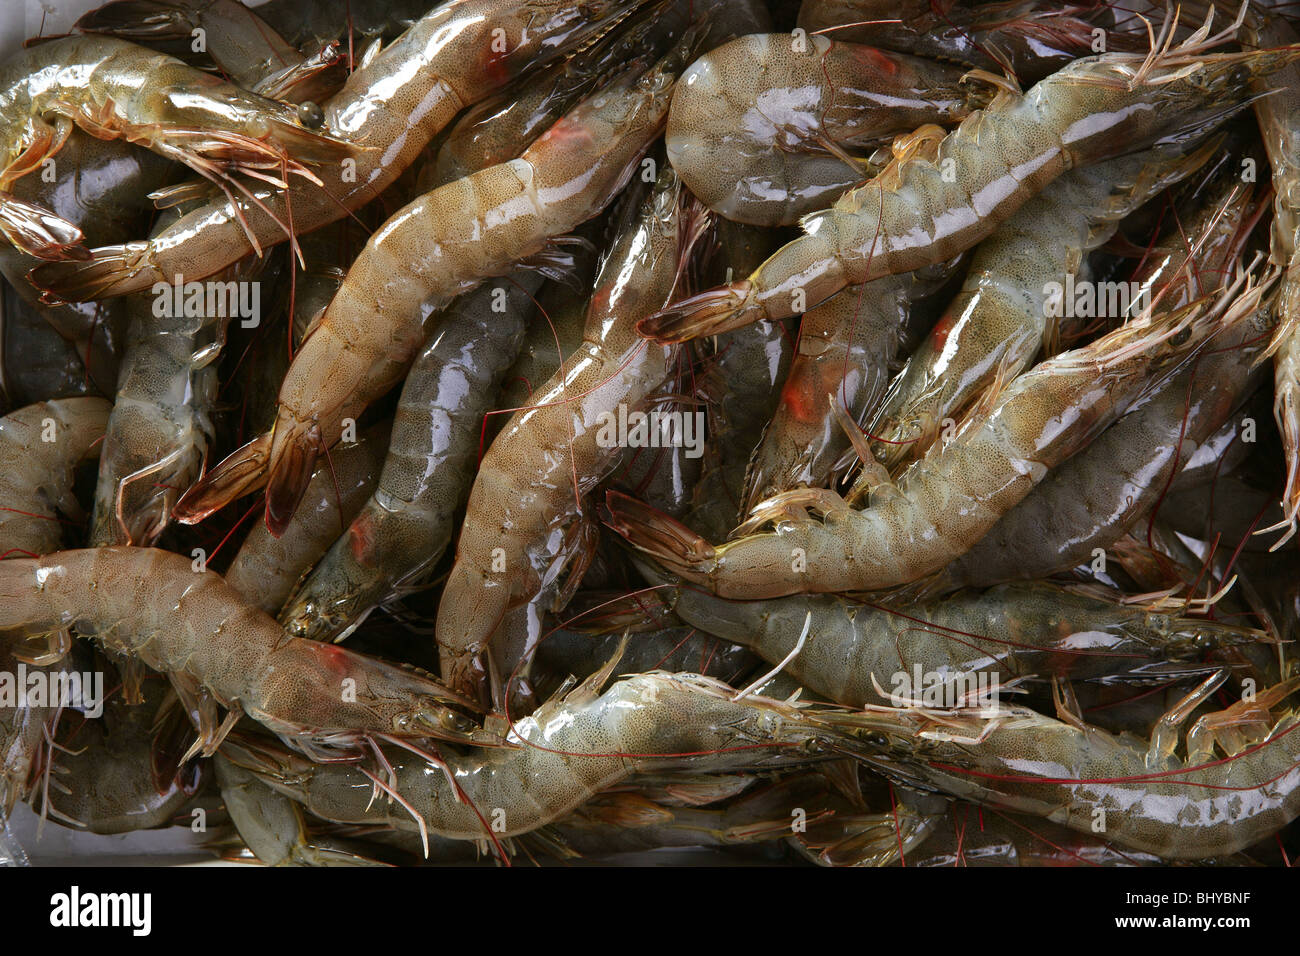 penaeus vannamei prawns shrimps pattern texture background Stock Photo